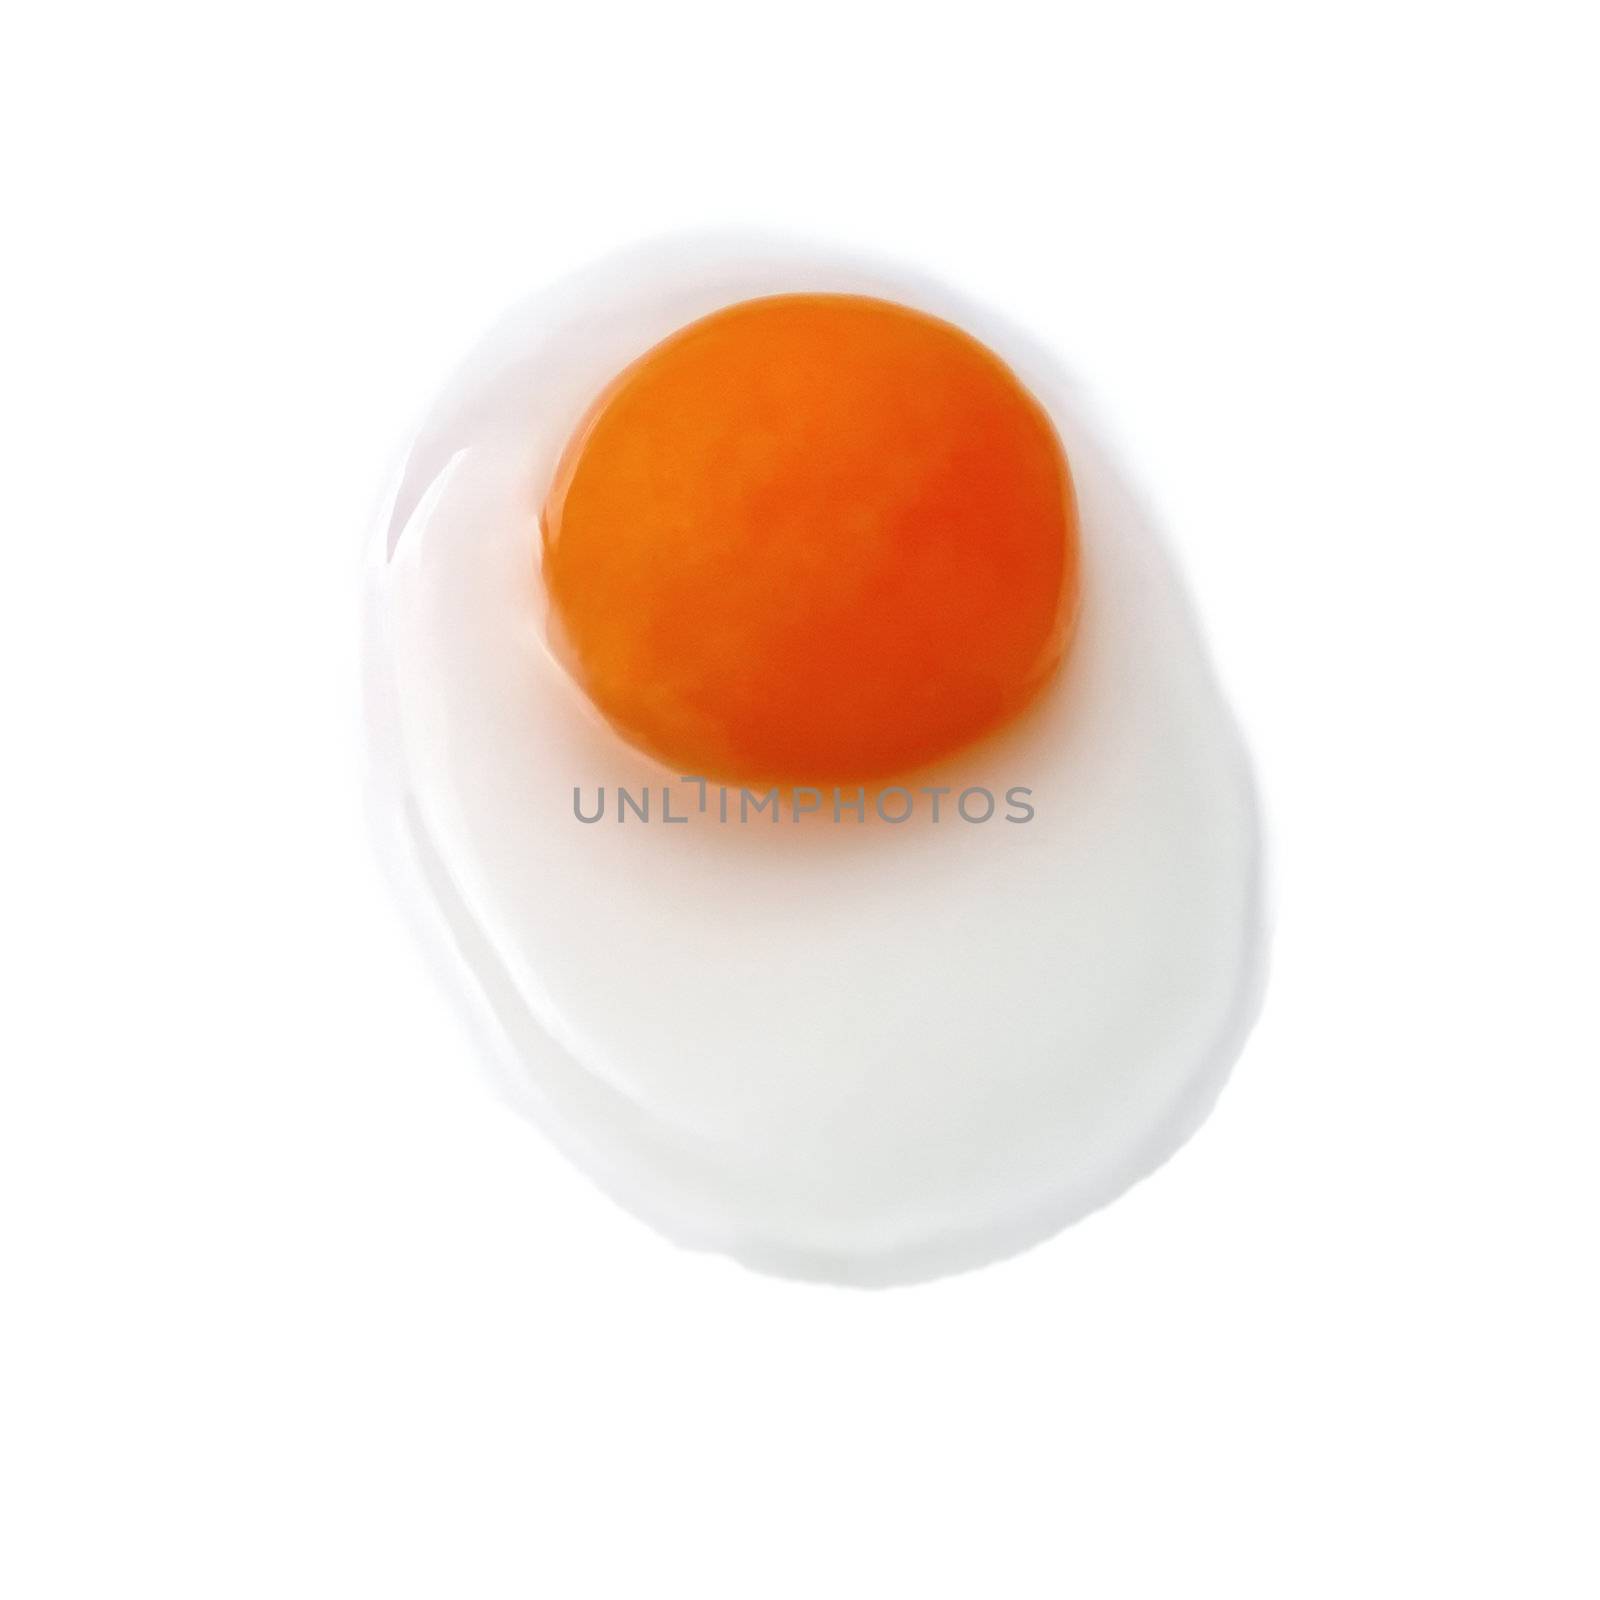 Egg yolk on a white background by ozaiachin